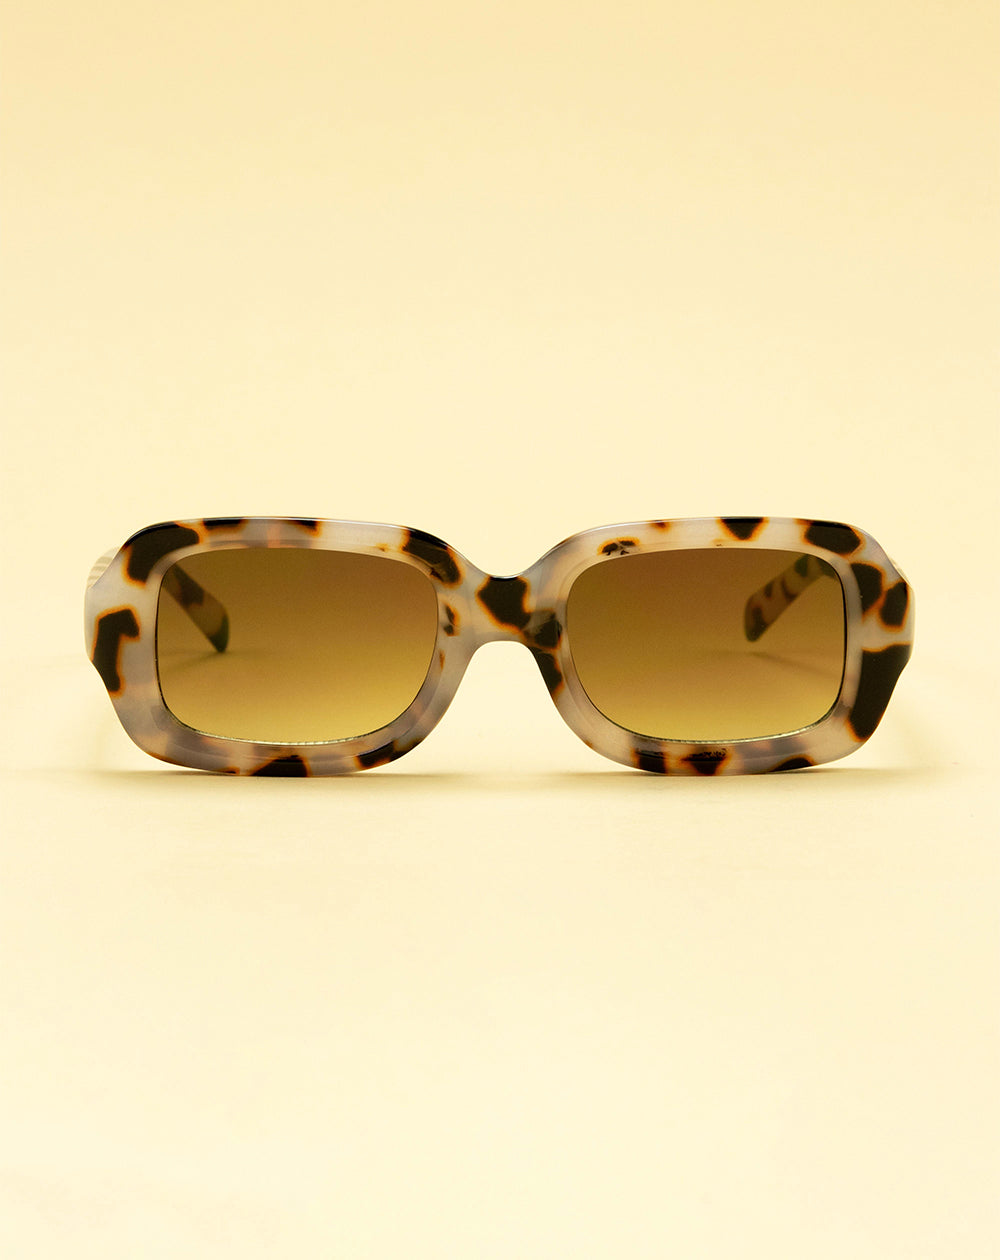 Powder ENY1 - Enya Sunglasses